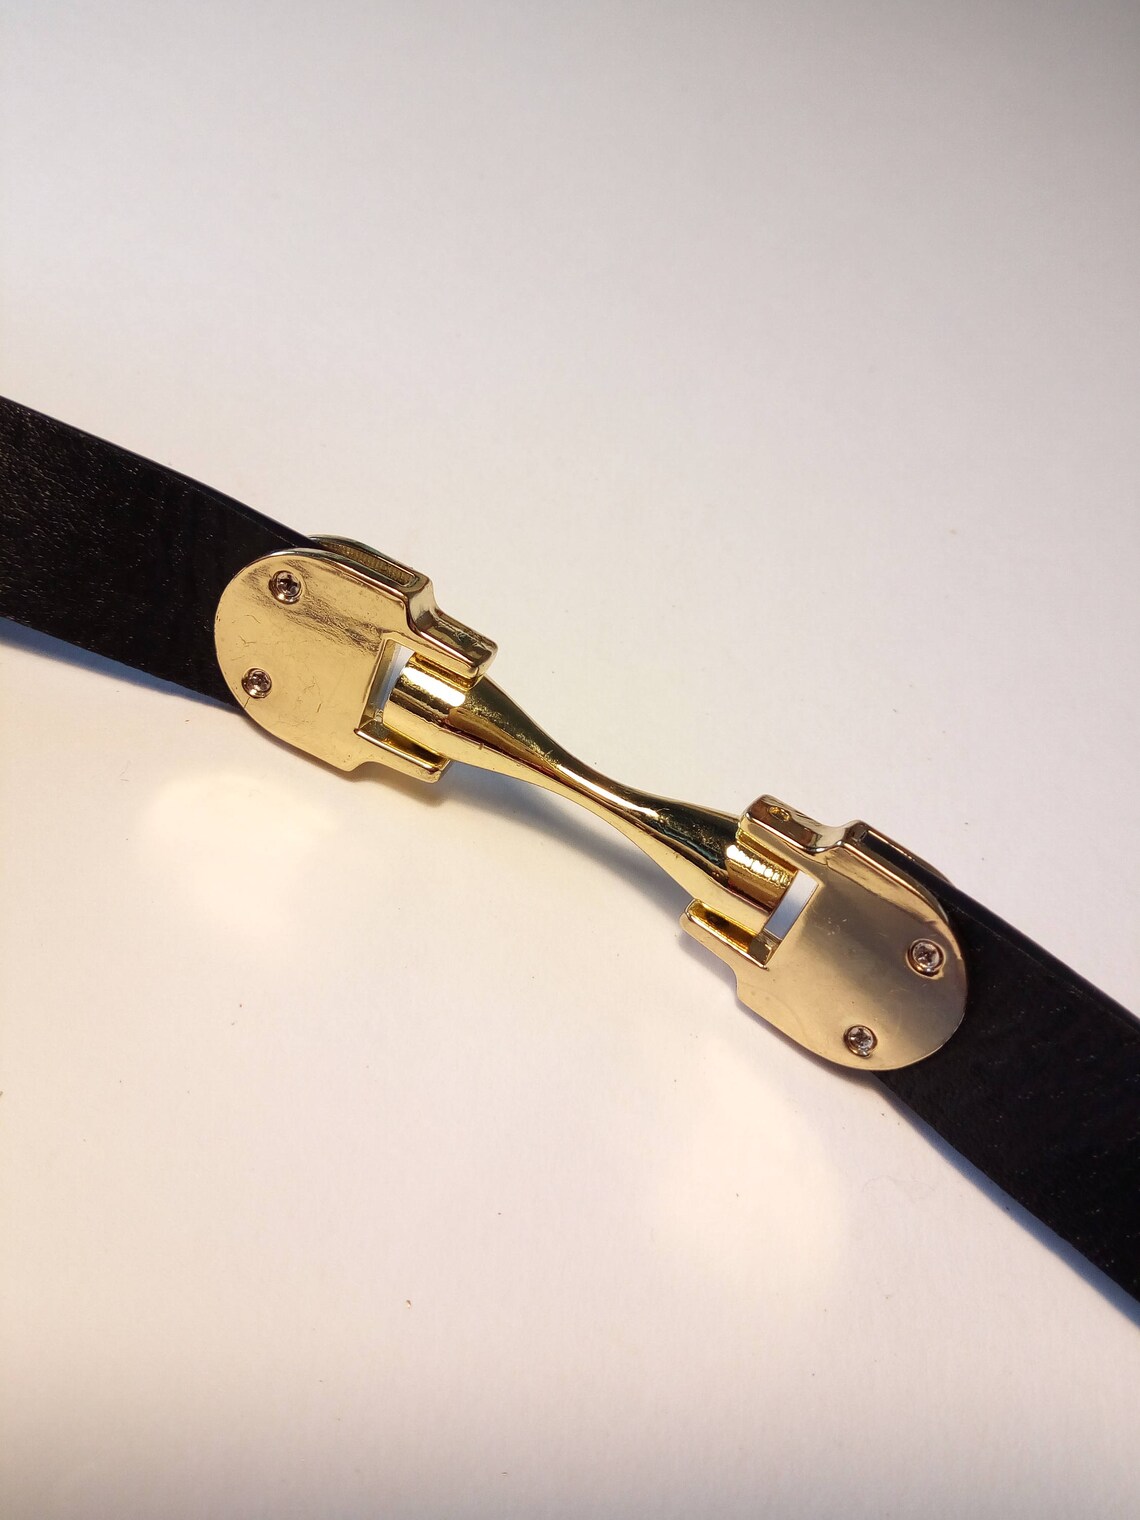 Italian black vintage wrist belt with gold color decorative | Etsy